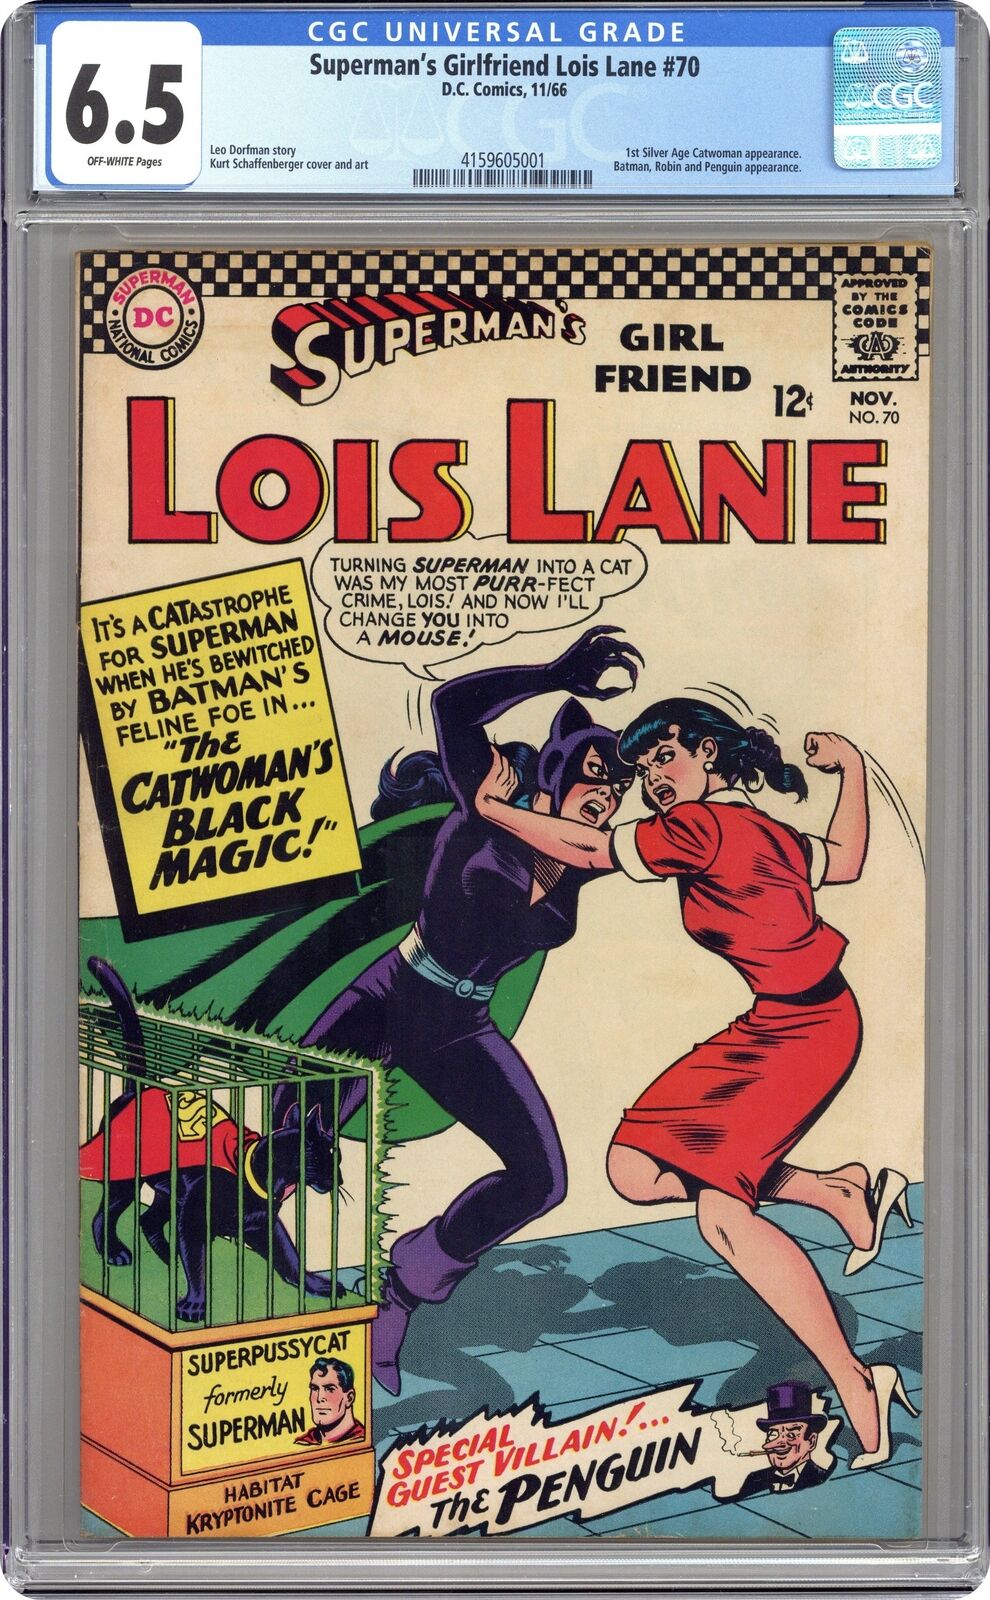 Superman's Girlfriend Lois Lane #70 CGC 6.5 1966 4159605001 1st SA app. Catwoman